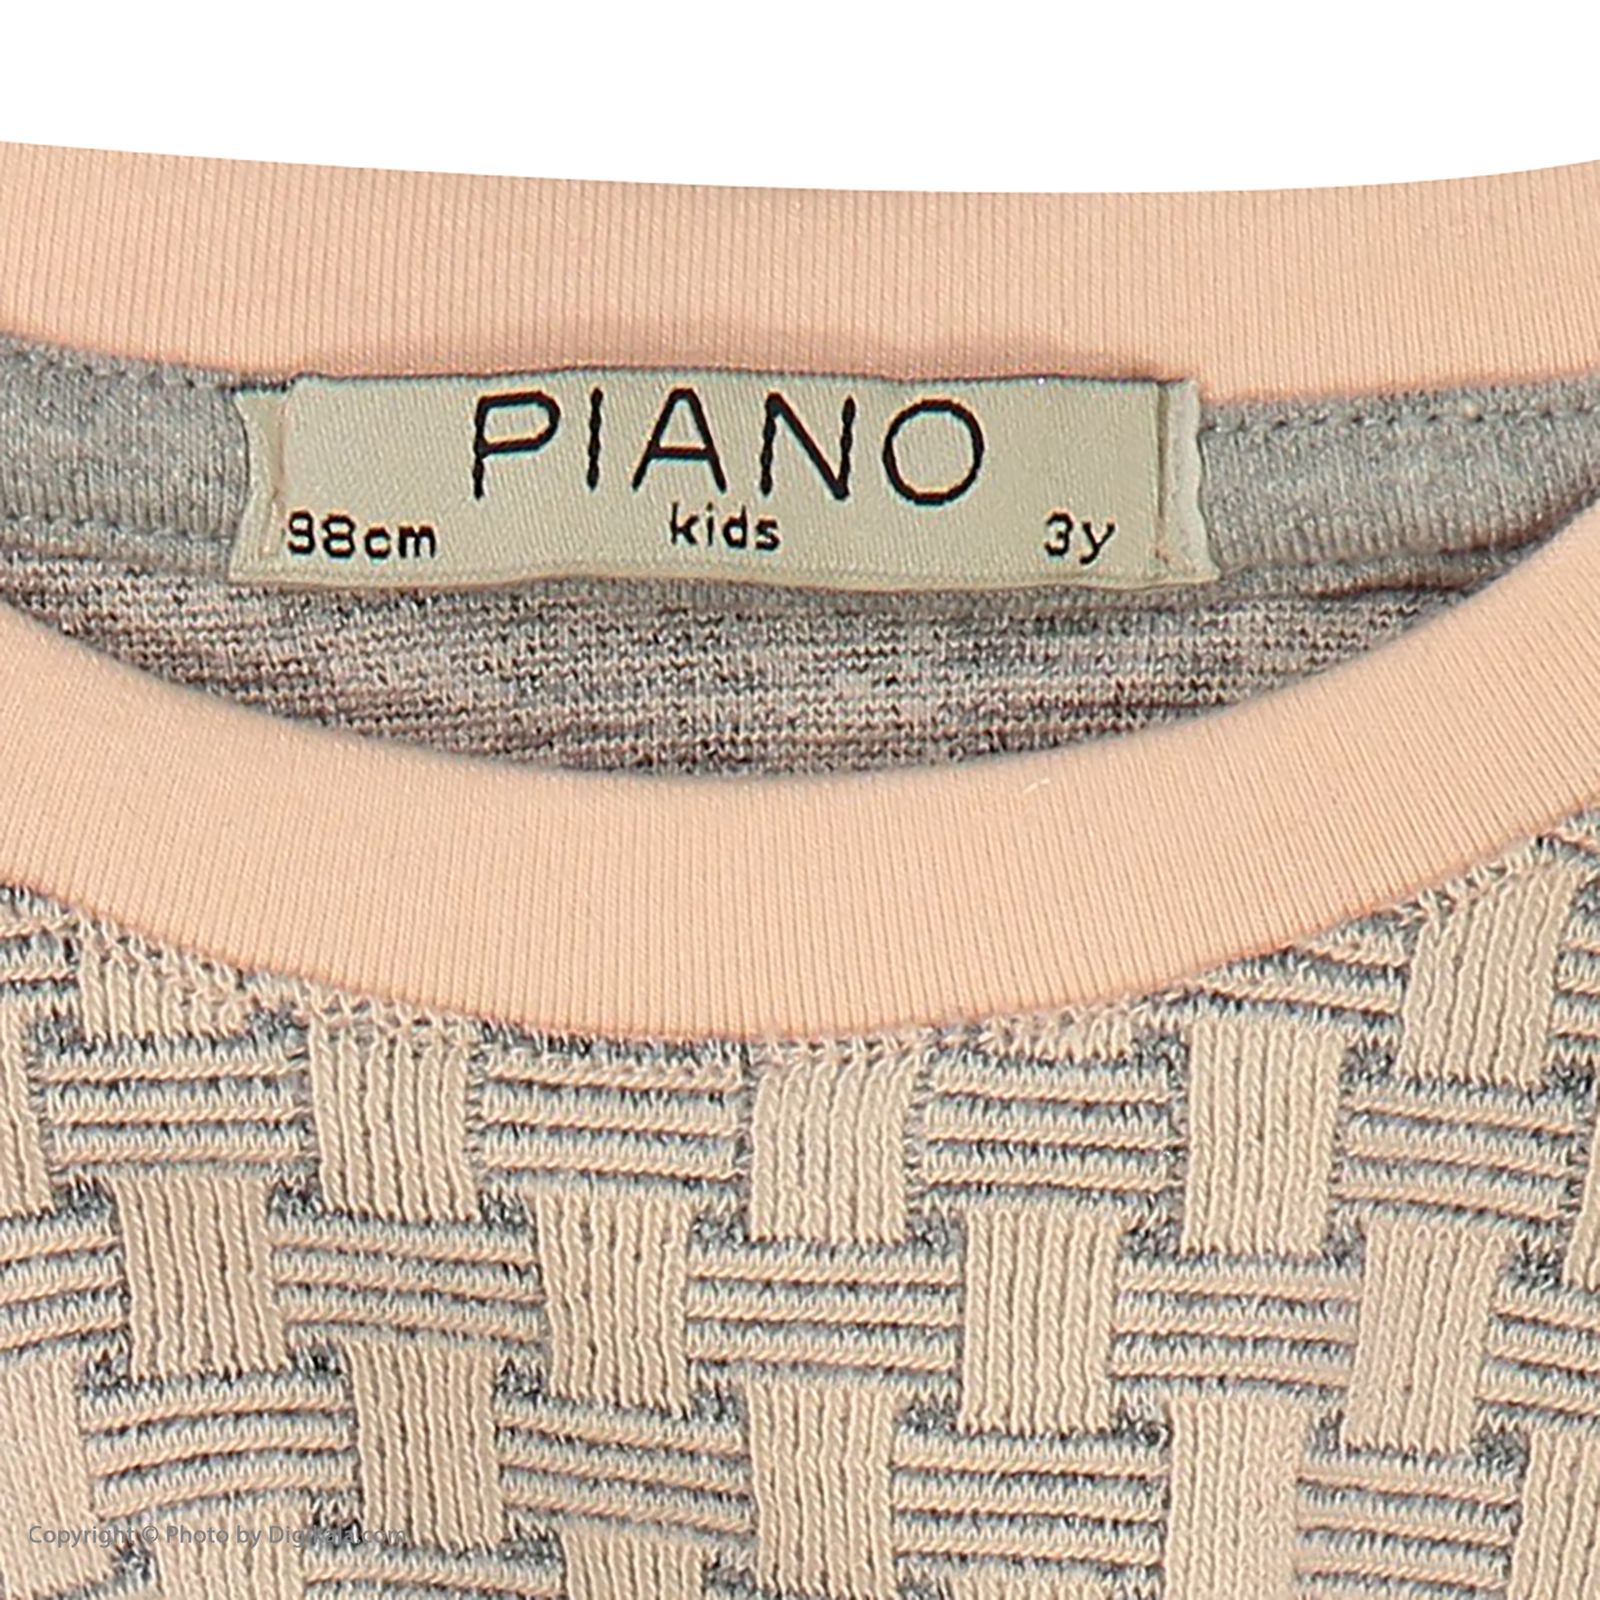 سویشرت دخترانه پیانو مدل 1648-41 -  - 5